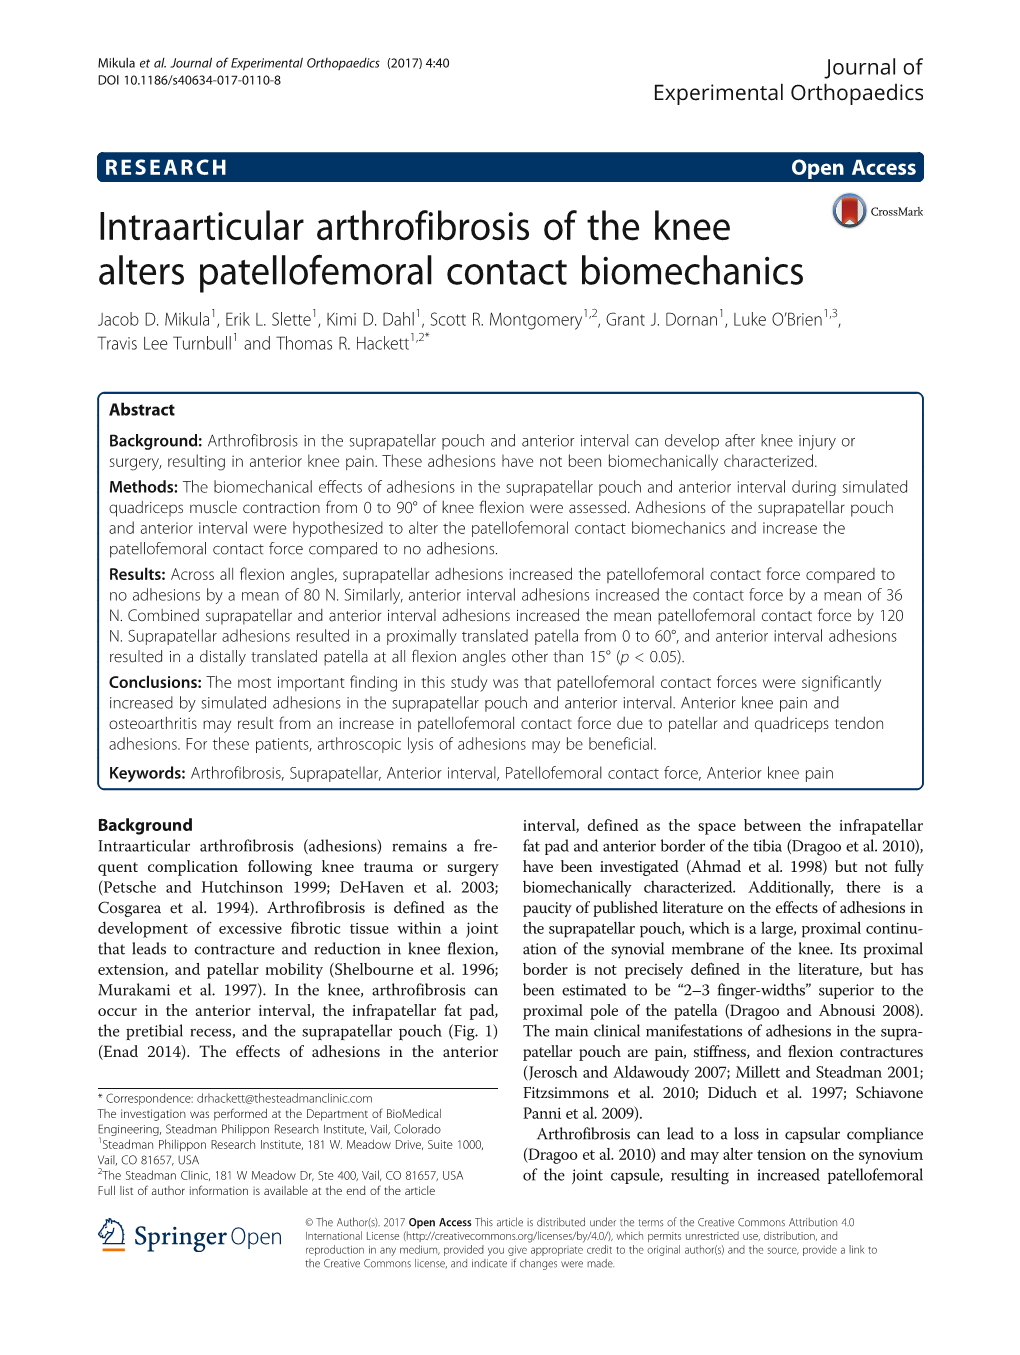 Intraarticular Arthrofibrosis of the Knee Alters Patellofemoral Contact Biomechanics Jacob D